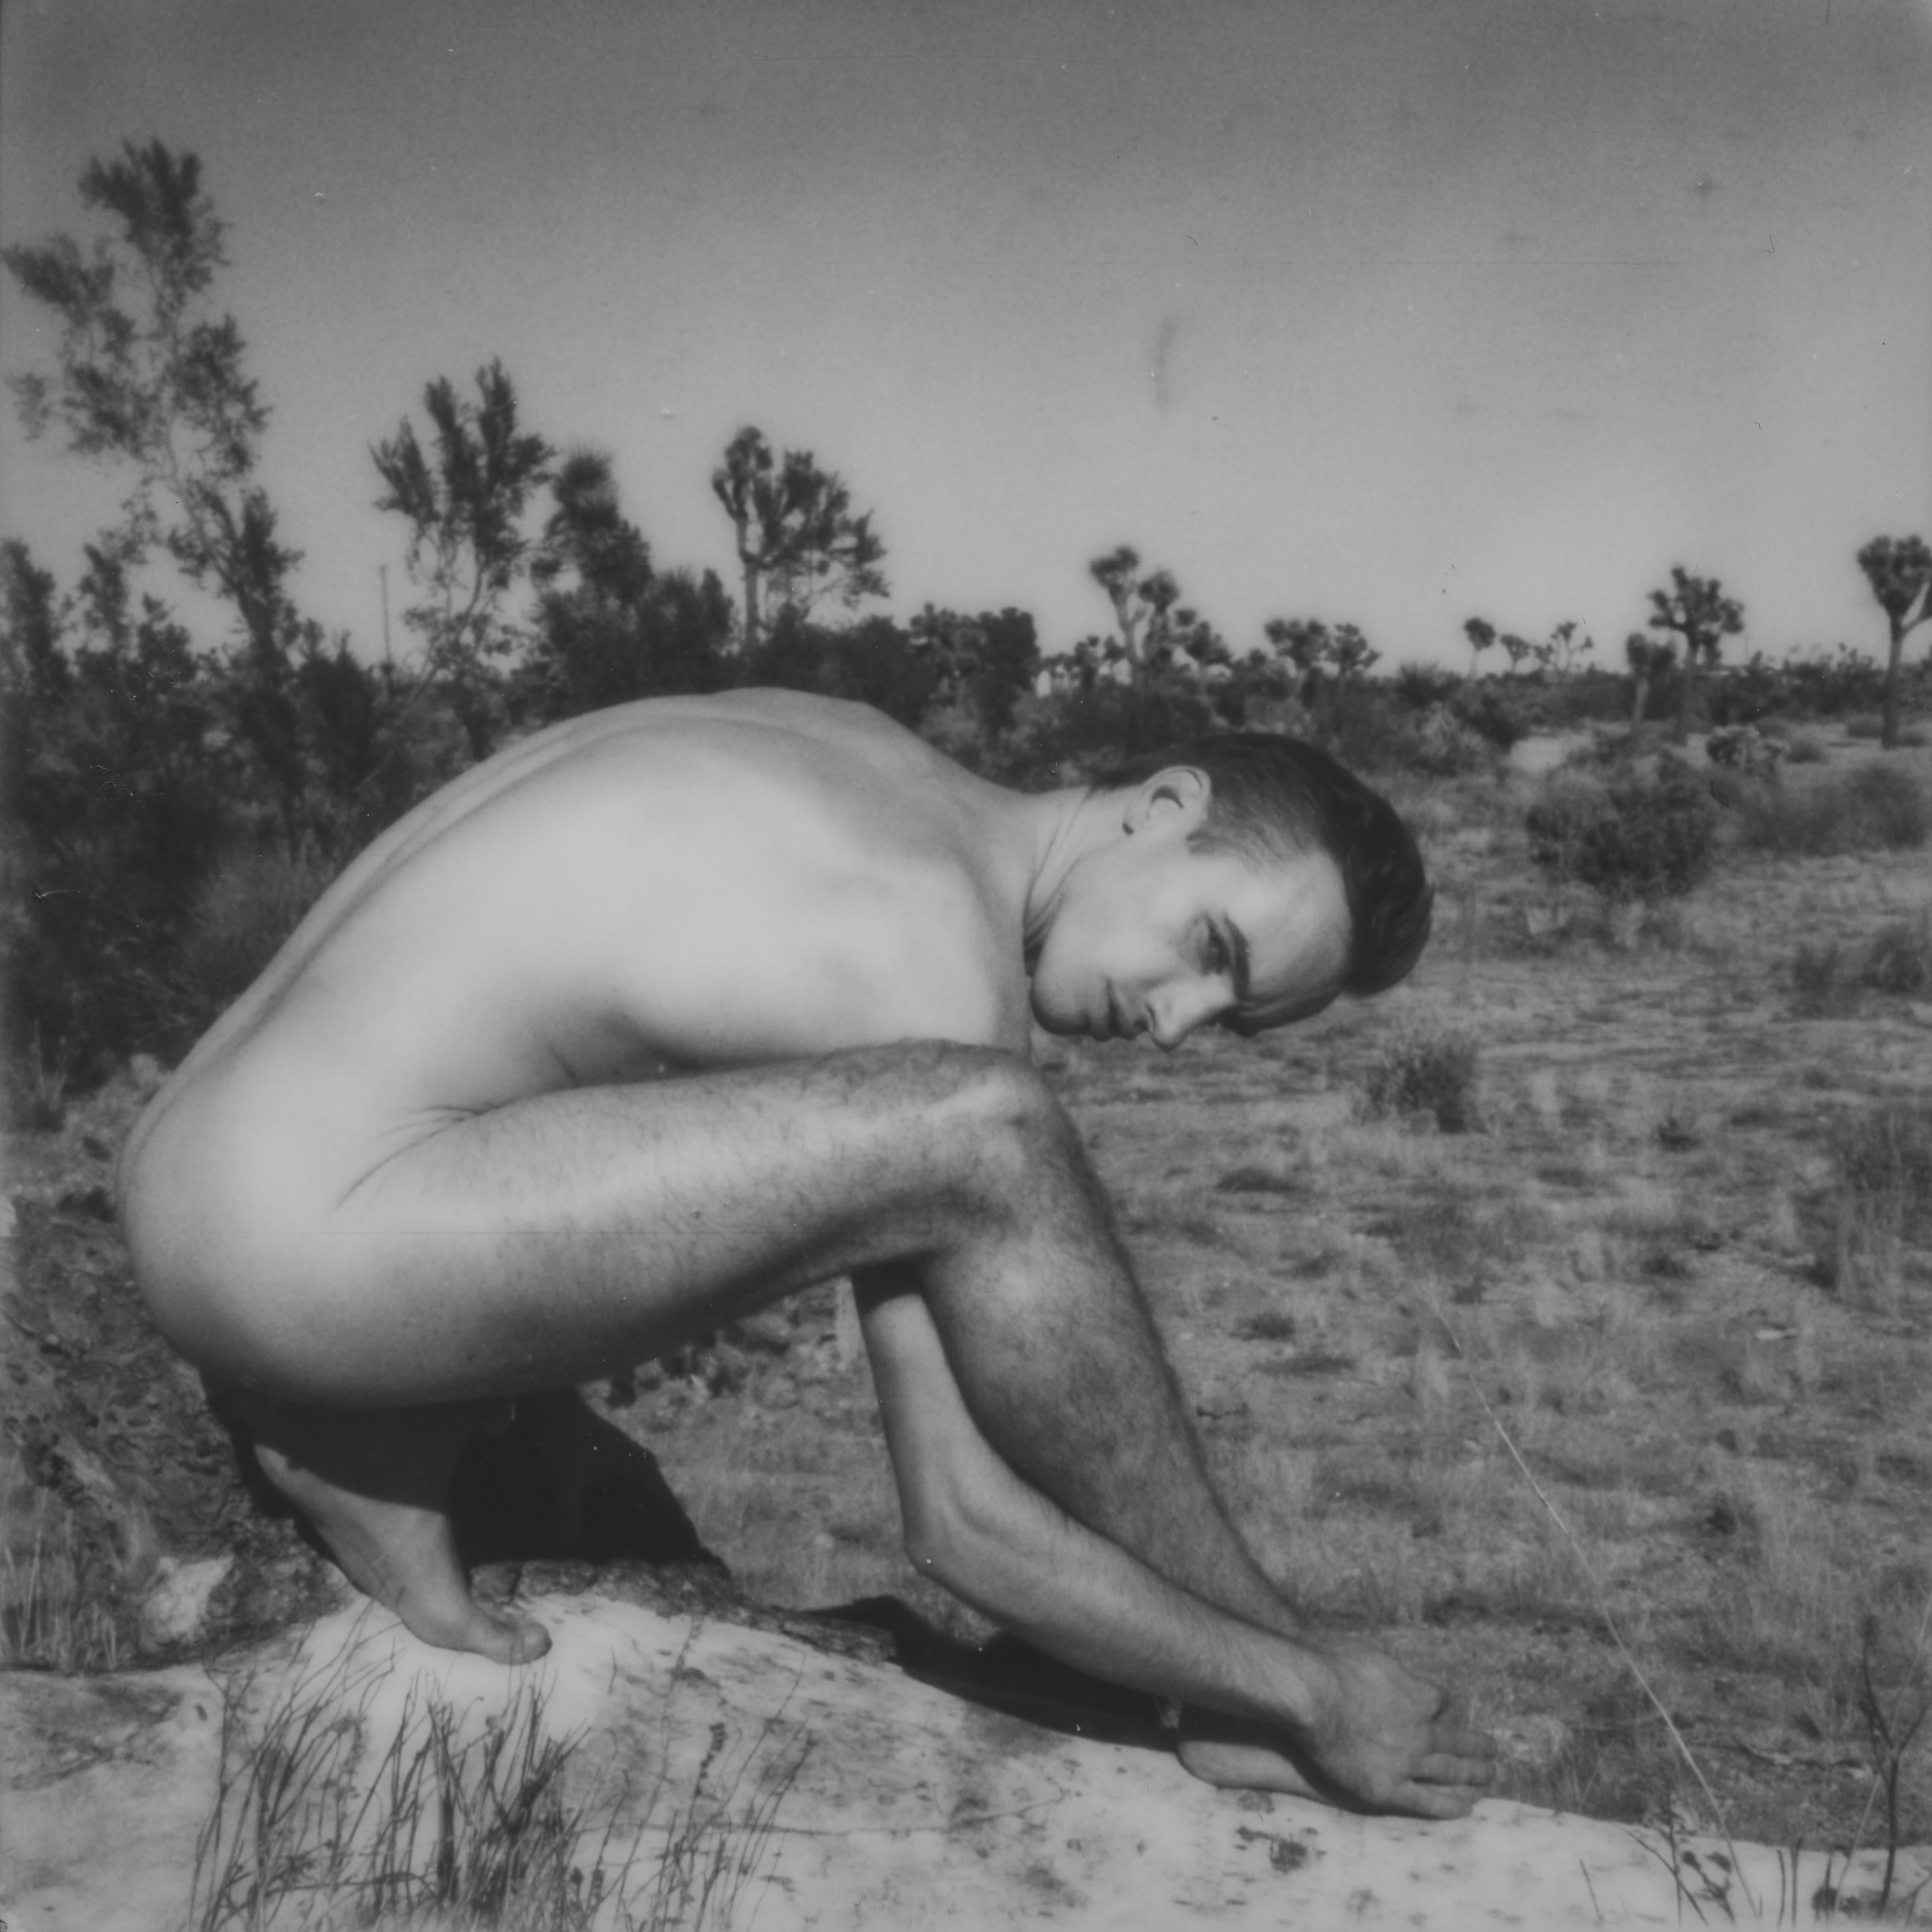 Unfold - Contemporary, Polaroid, Nude, 21st Century, Joshua Tree